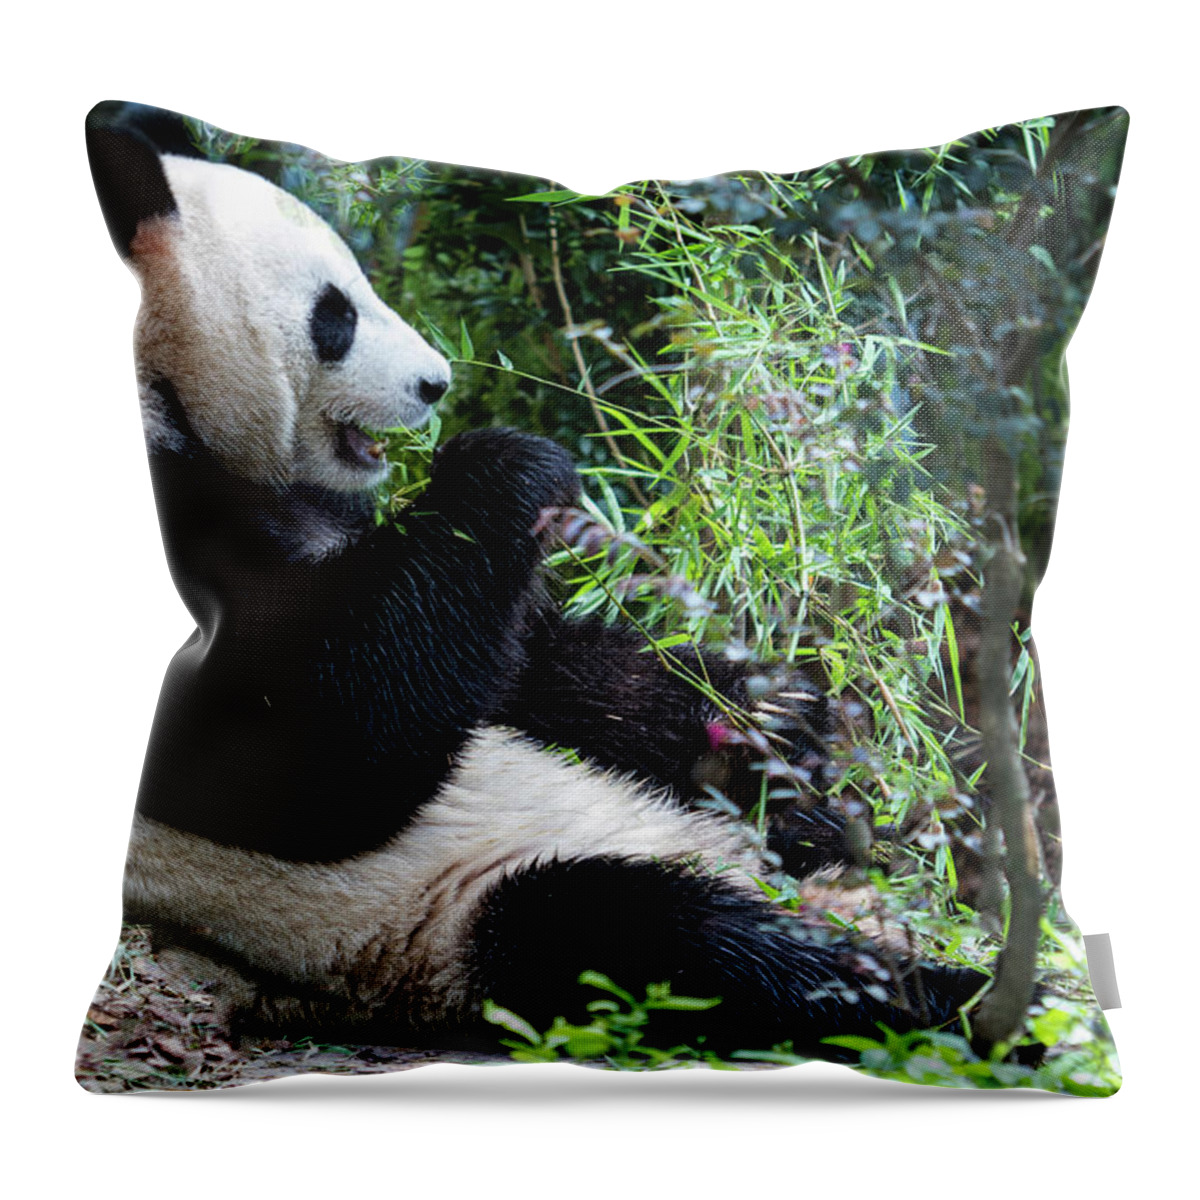 Panda Throw Pillow featuring the photograph Giant Panda by Manoj Shah